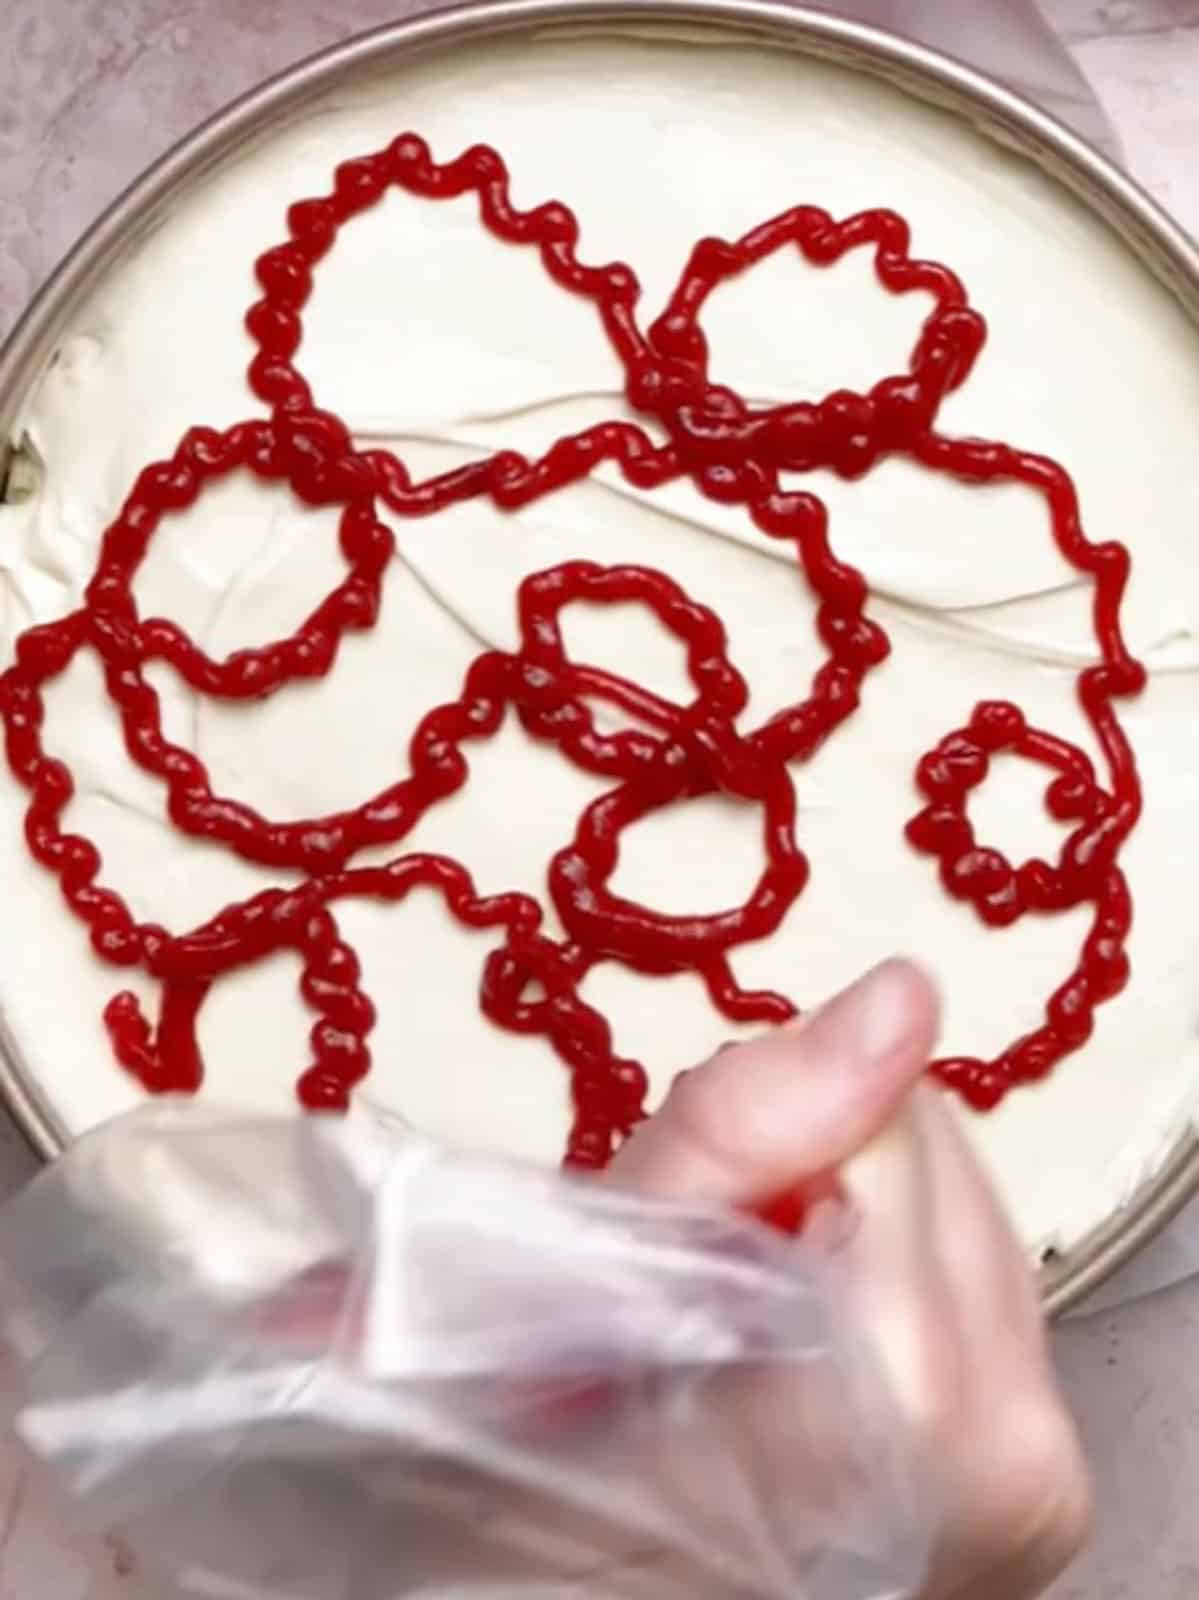 cranberry raspberry swirl in cheesecake